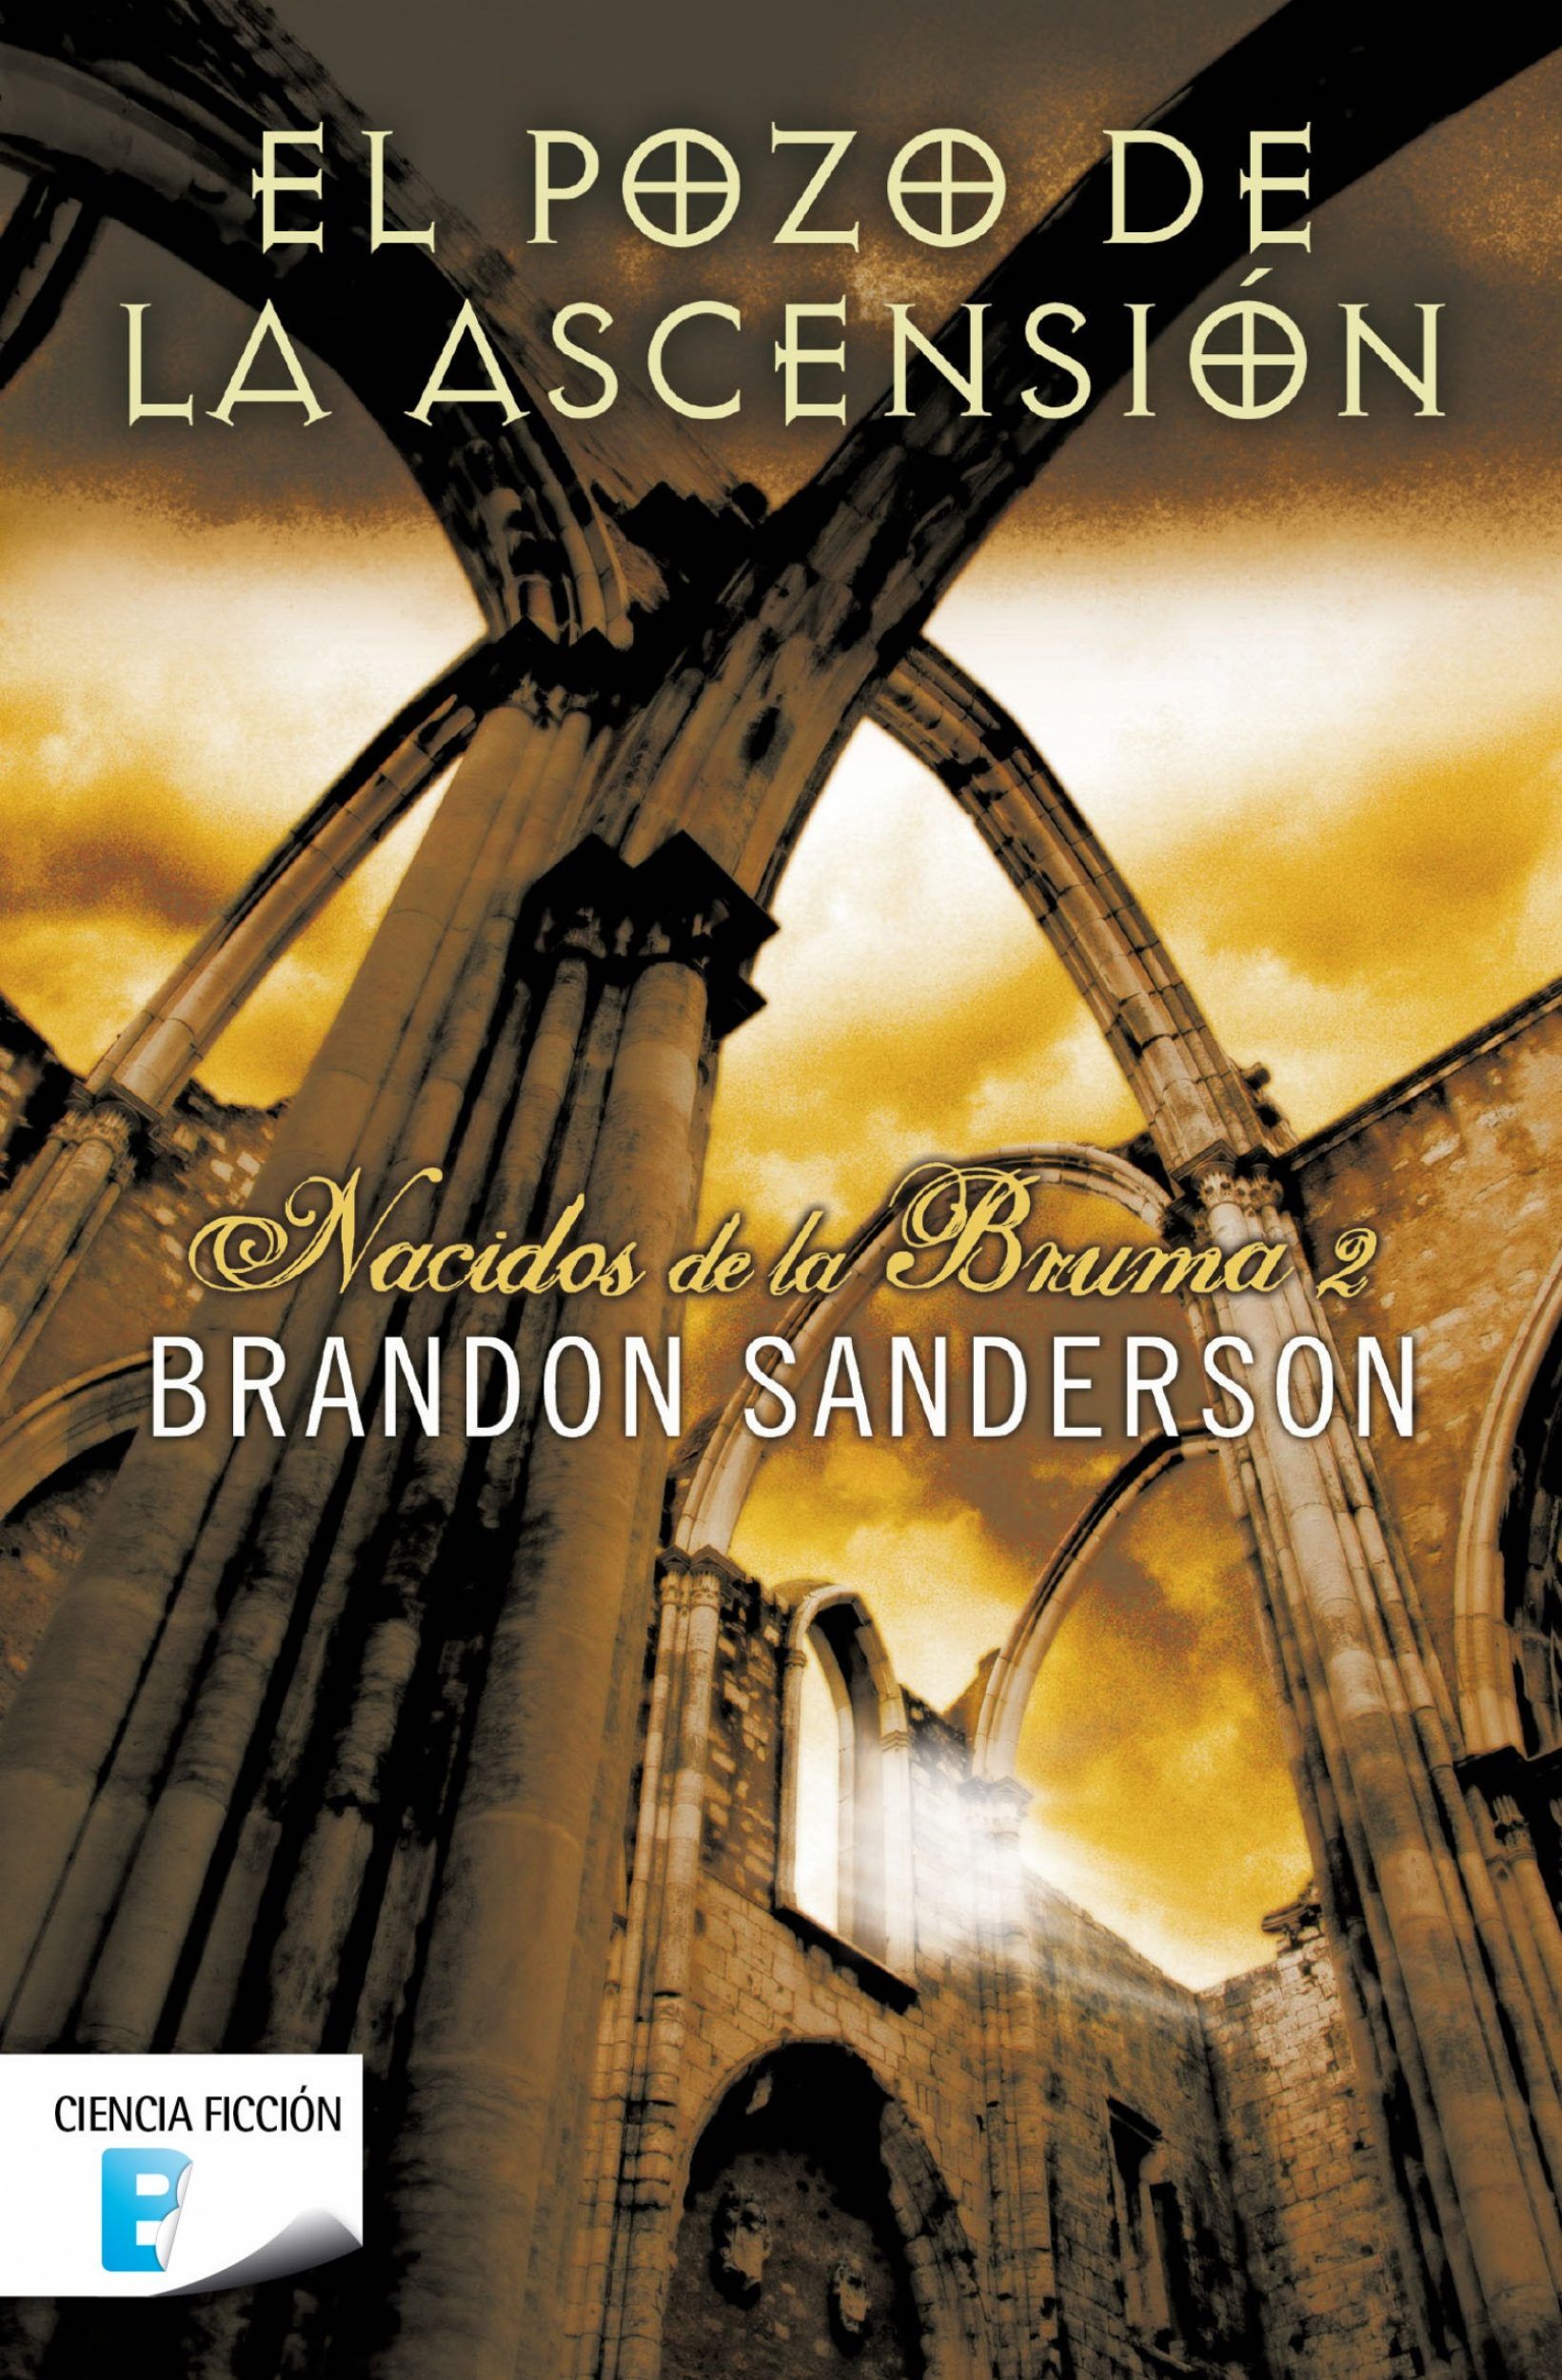 “El Pozo de la Ascensión” (Brandon Sanderson, Nova)